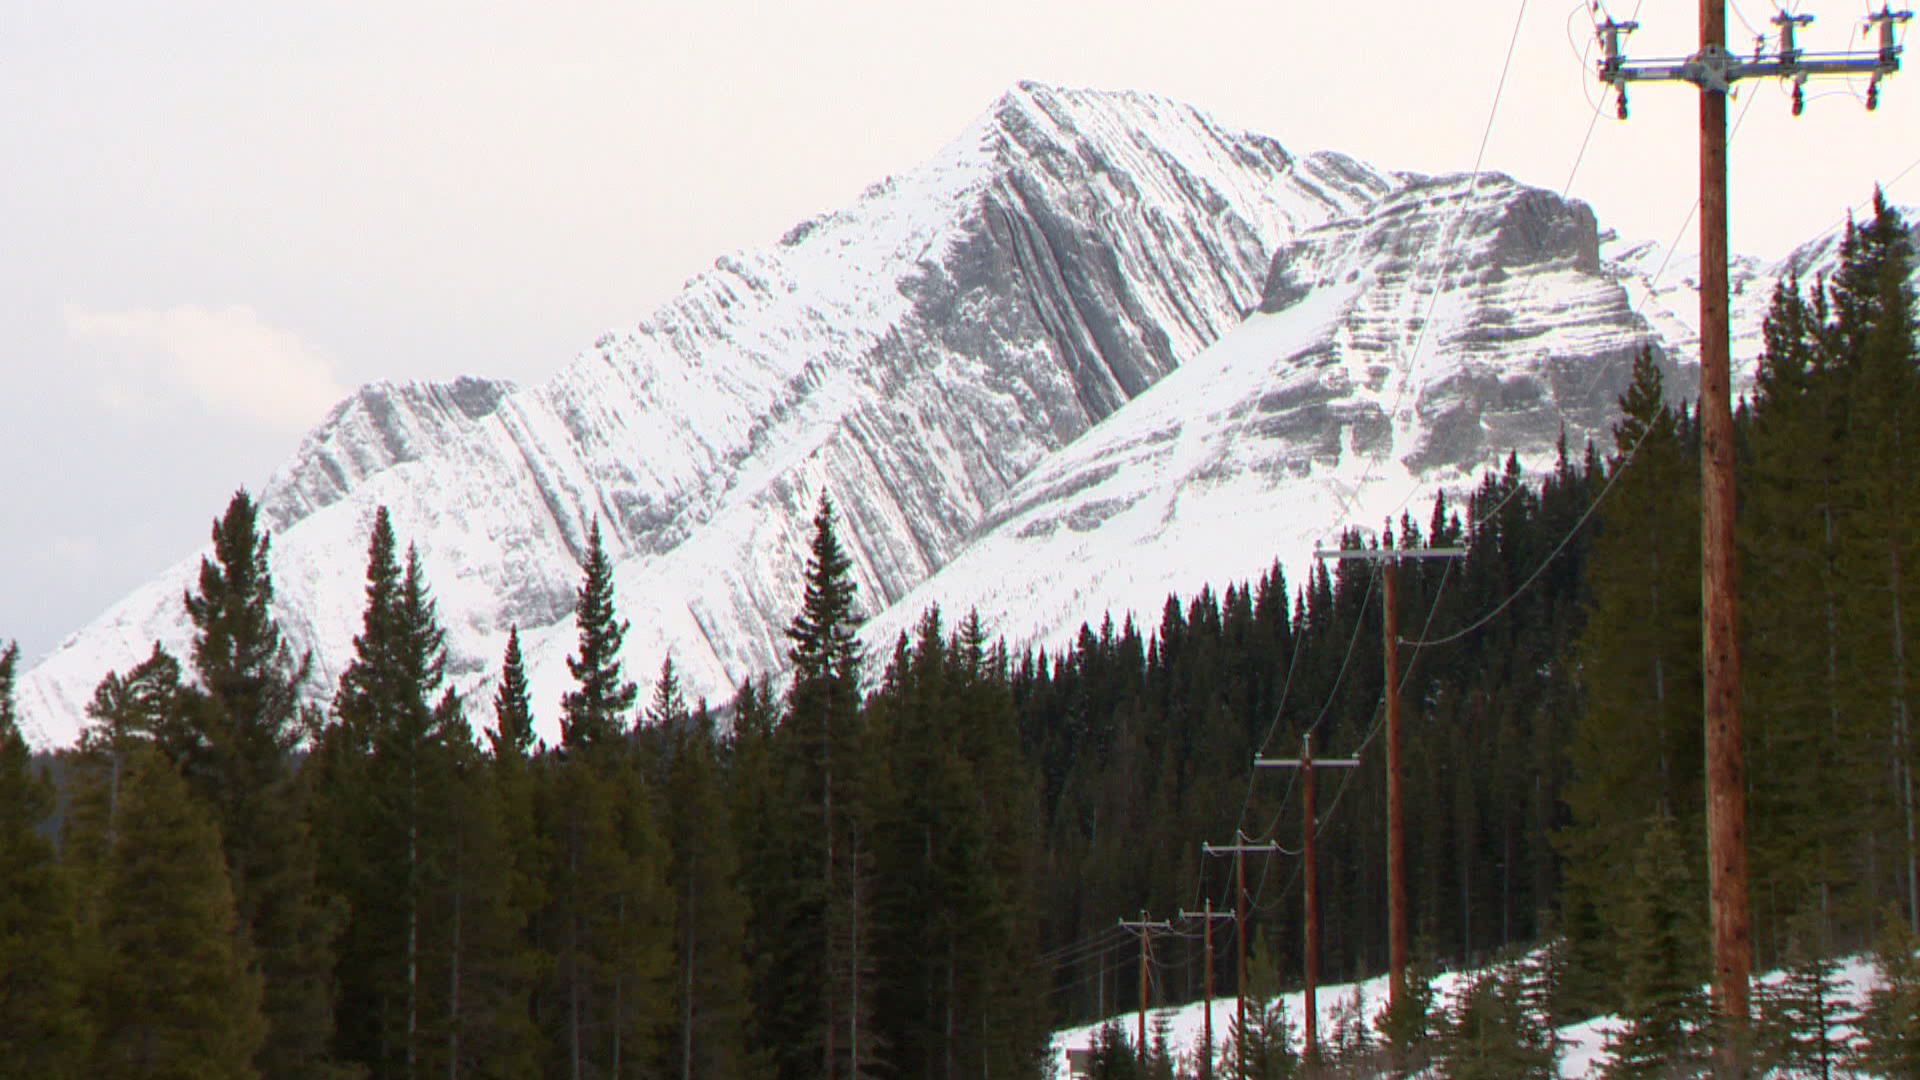 B.C. ice climber dead following avalanche in Alberta's Kananaskis